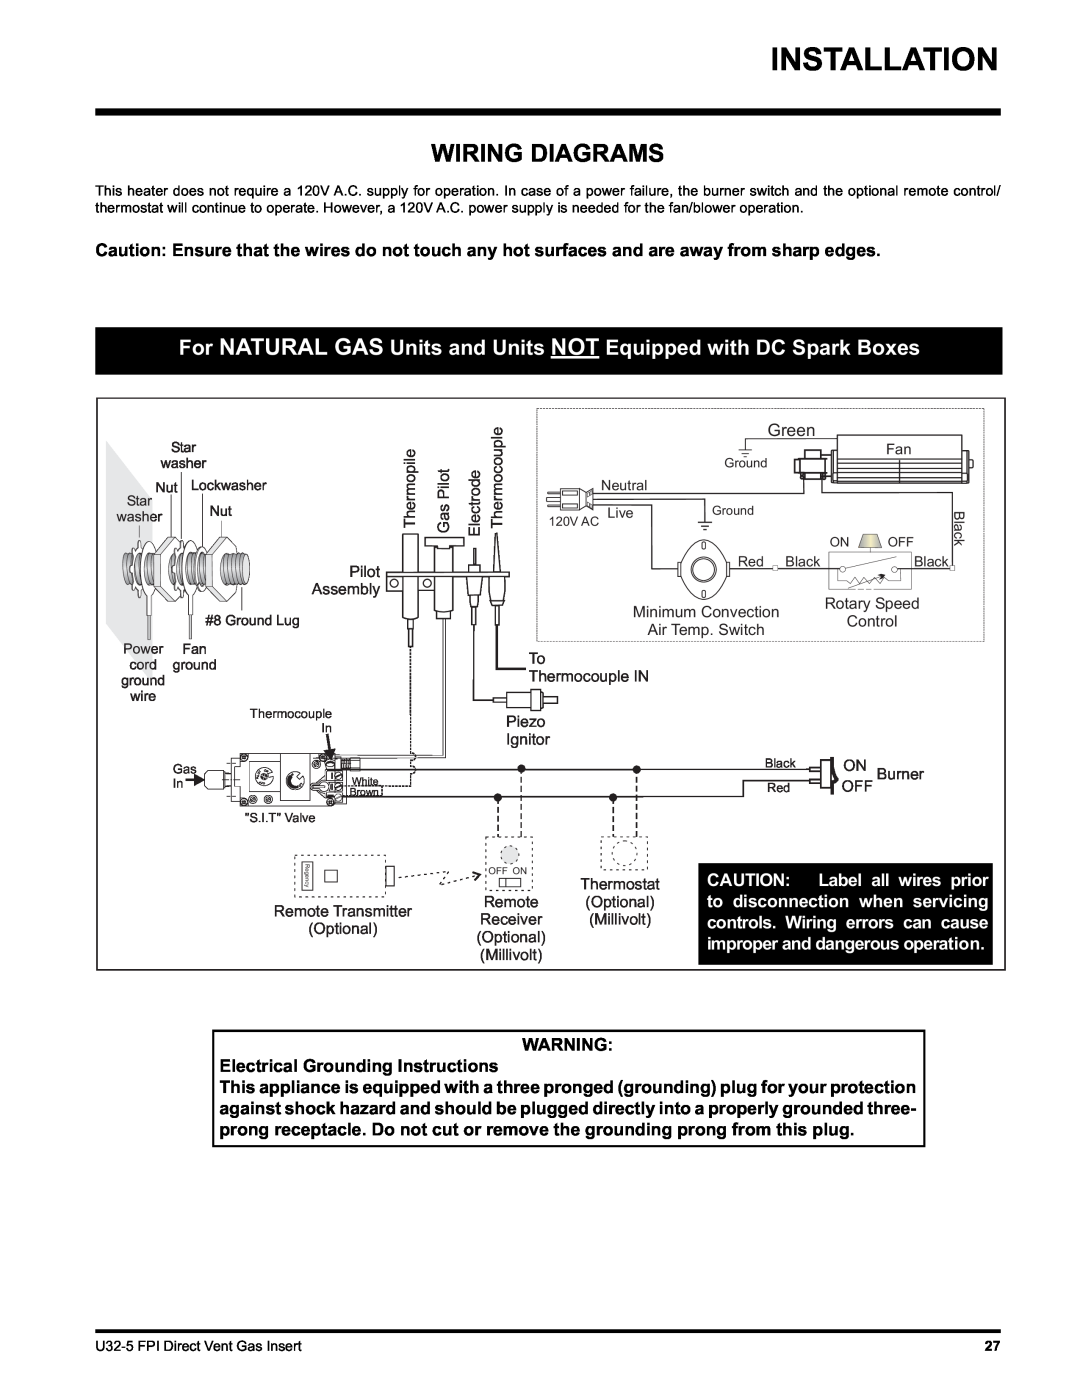 Hampton Direct U32 installation manual Installation, Wiring Diagrams, Green, Electrical Grounding Instructions 